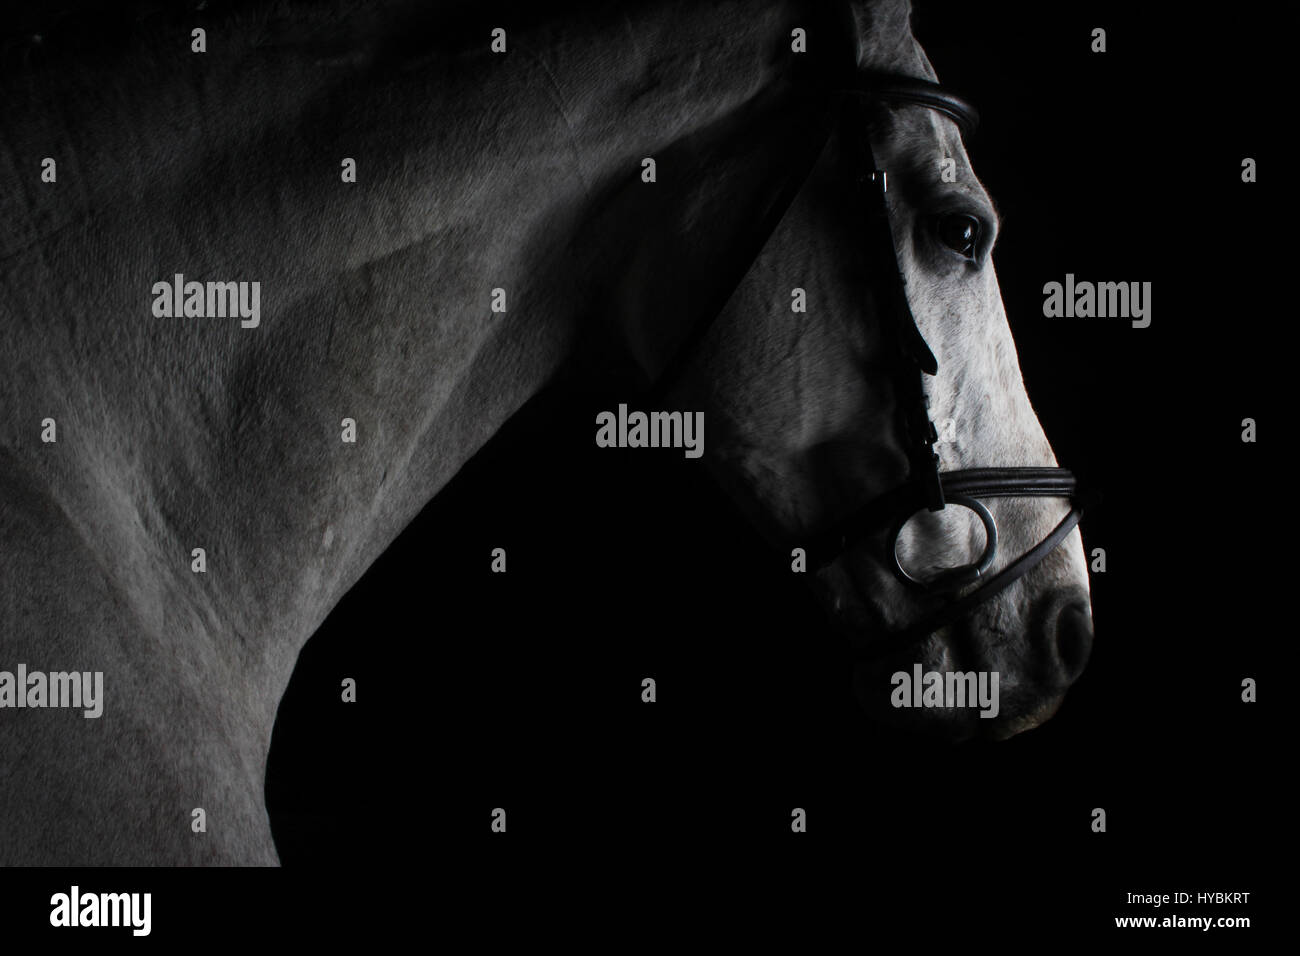 fine art equestrian photography Stock Photo